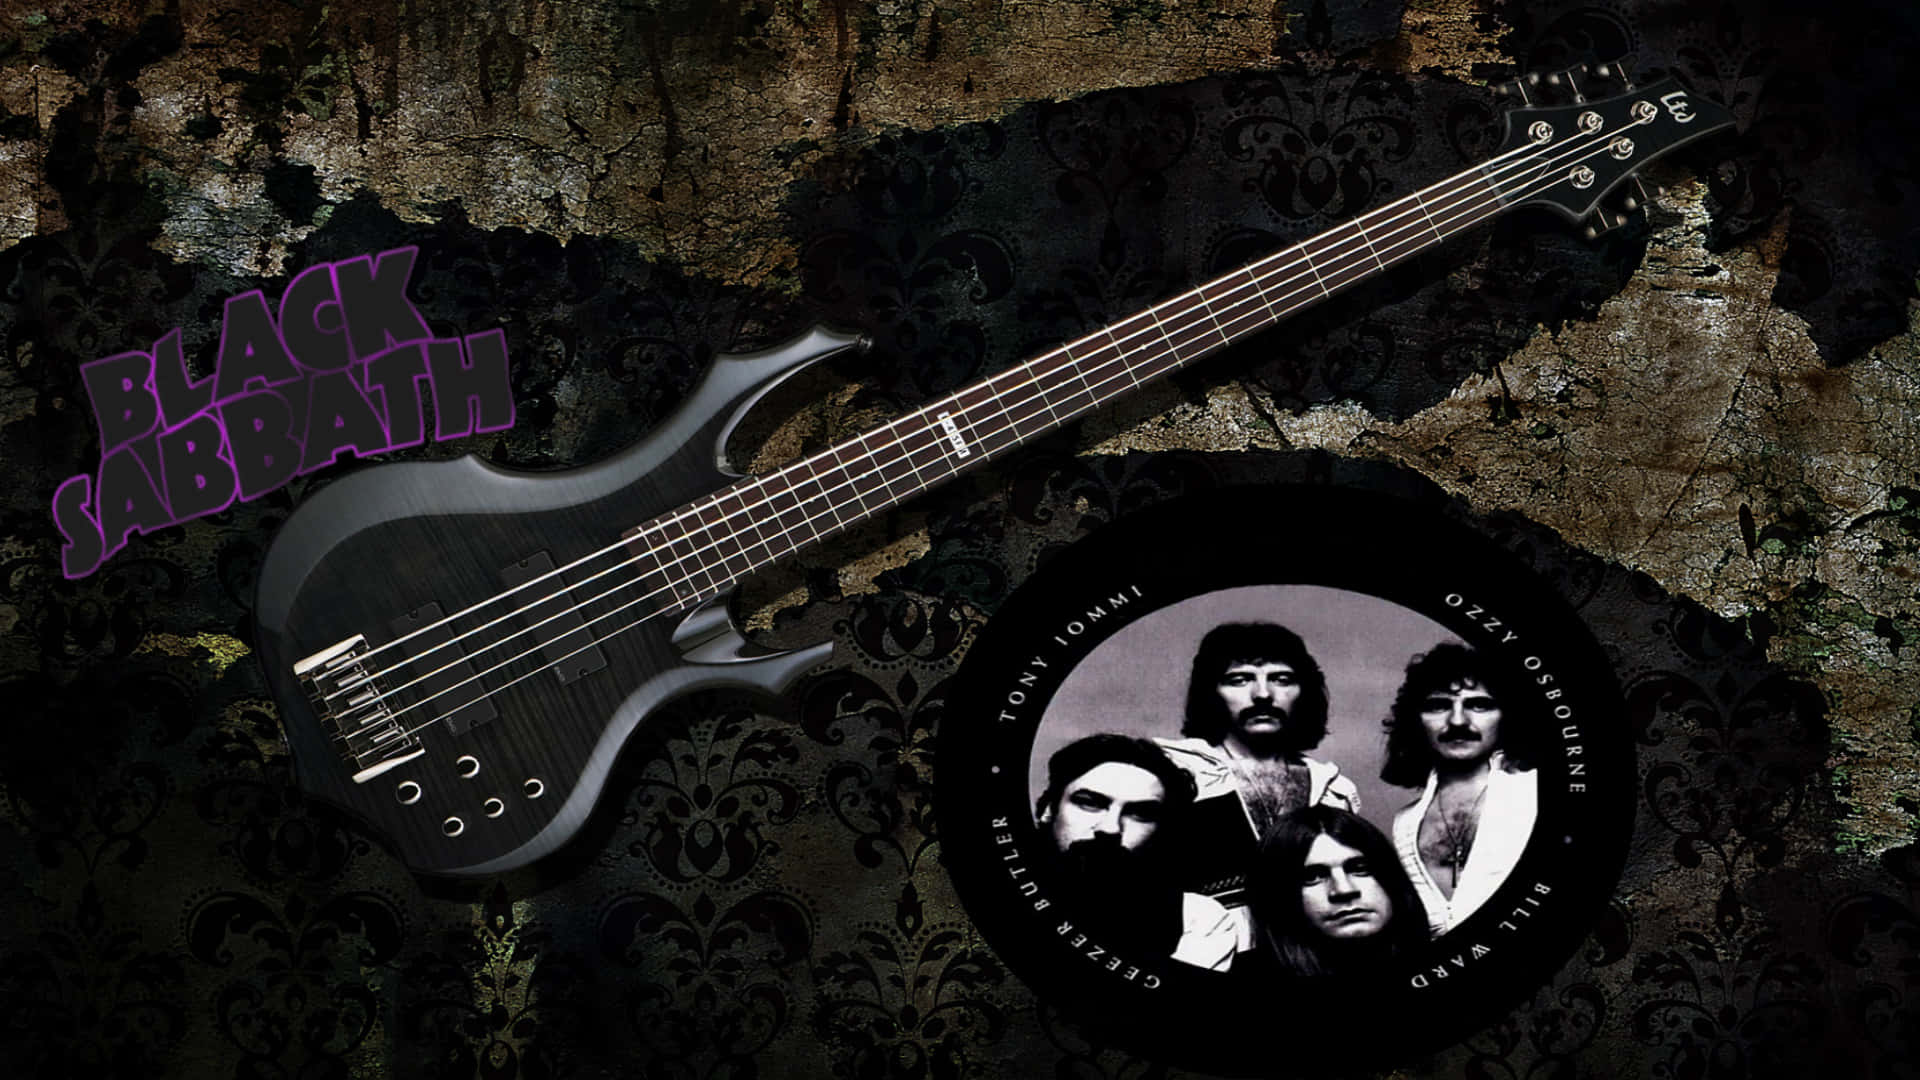 Black Sabbath Bandand Guitar Wallpaper Wallpaper